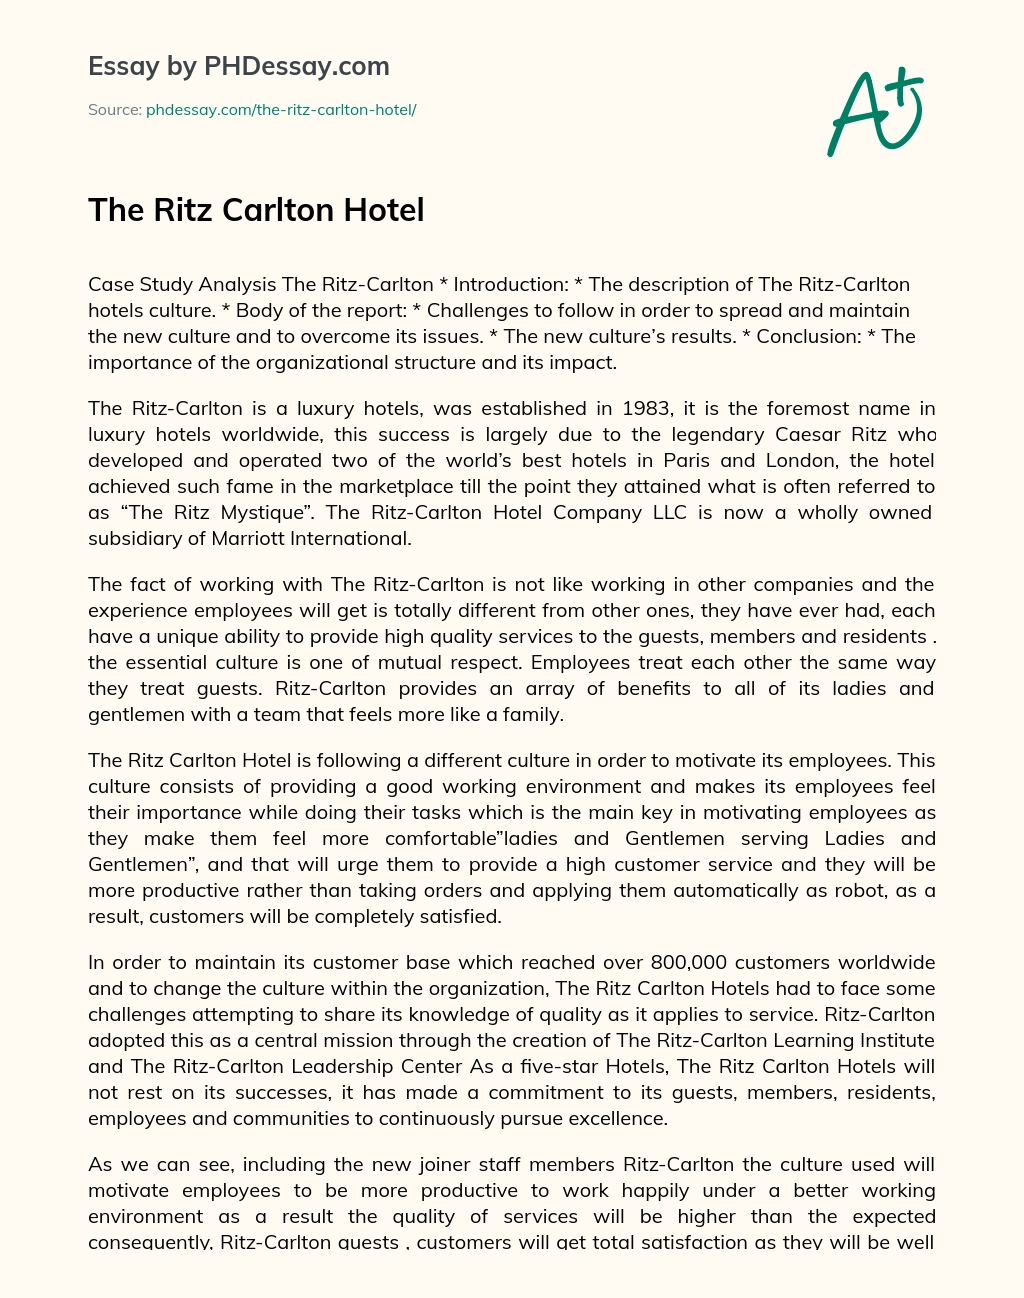 The Ritz Carlton Hotel essay